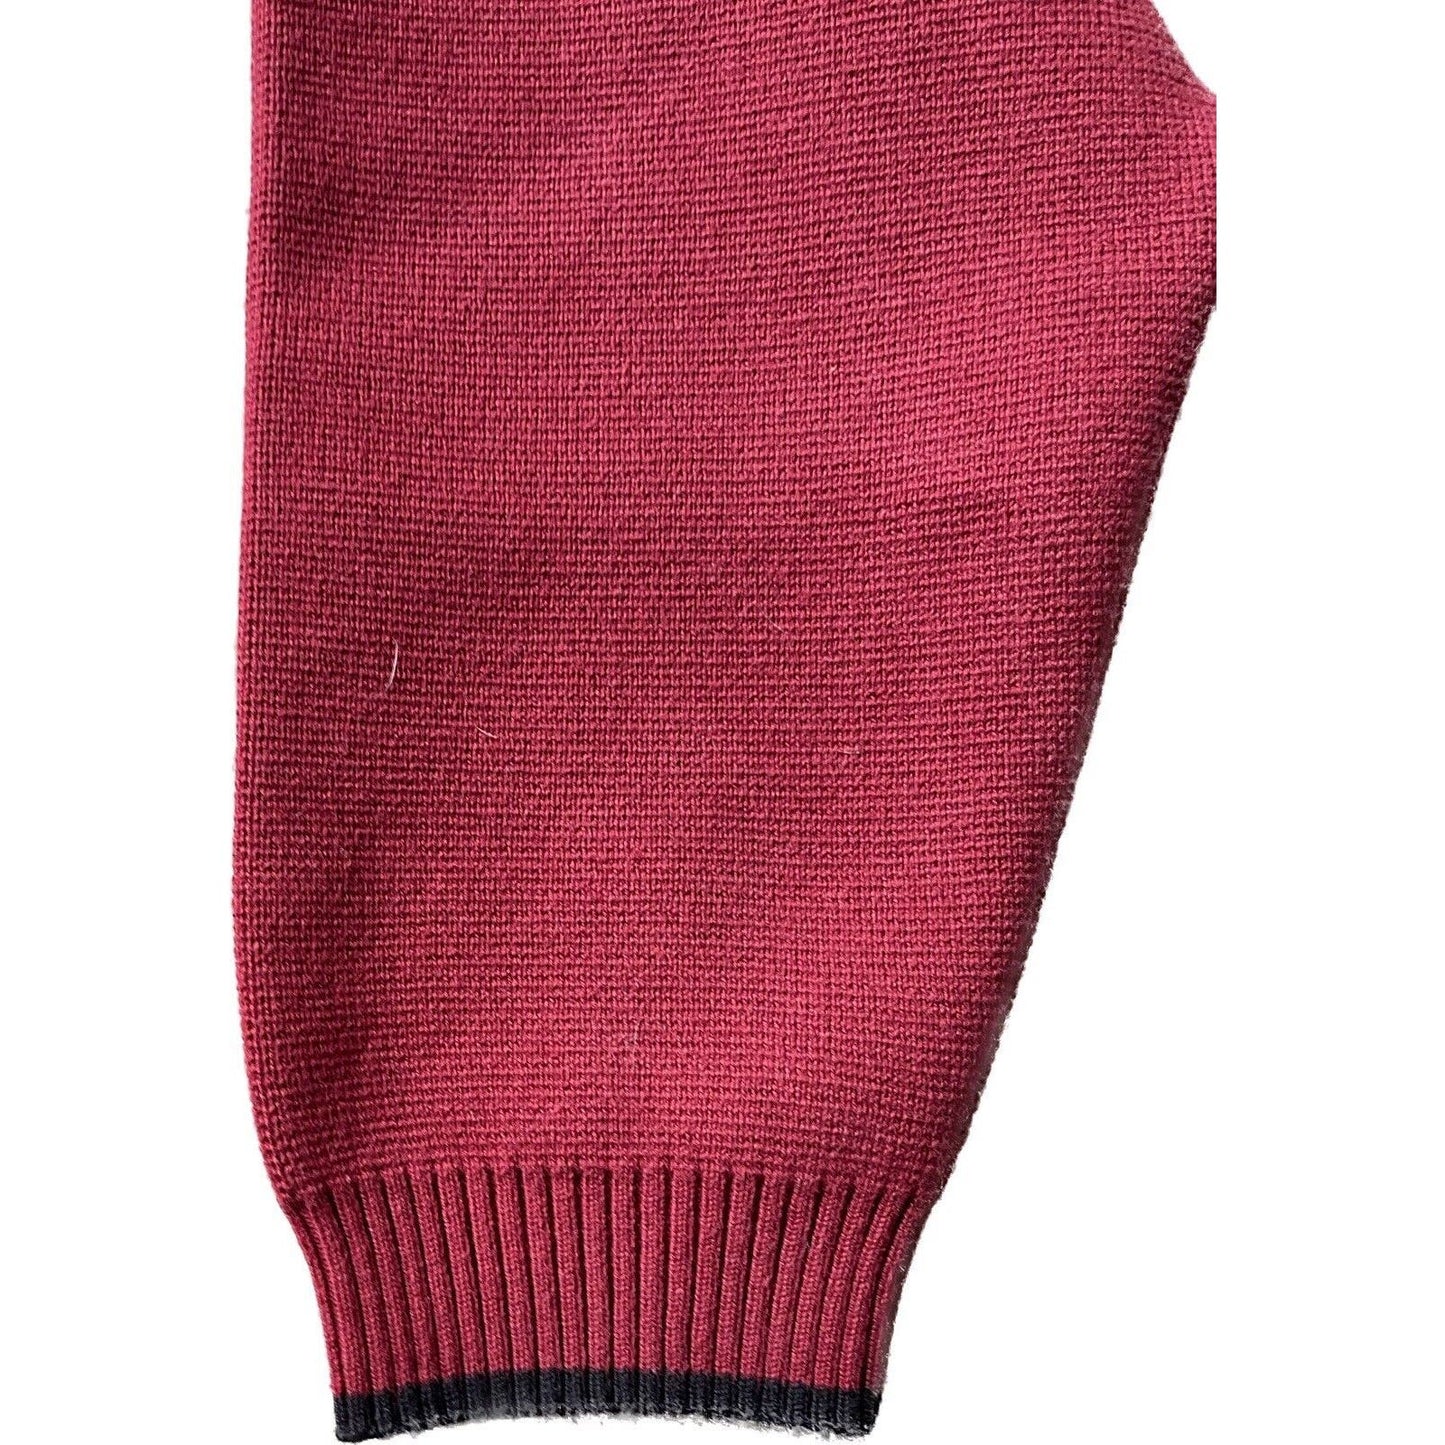 Pendleton Medium Sweater Mens Red 1/4 Zip Pullover Long Sleeve Sweatshirt Cotton